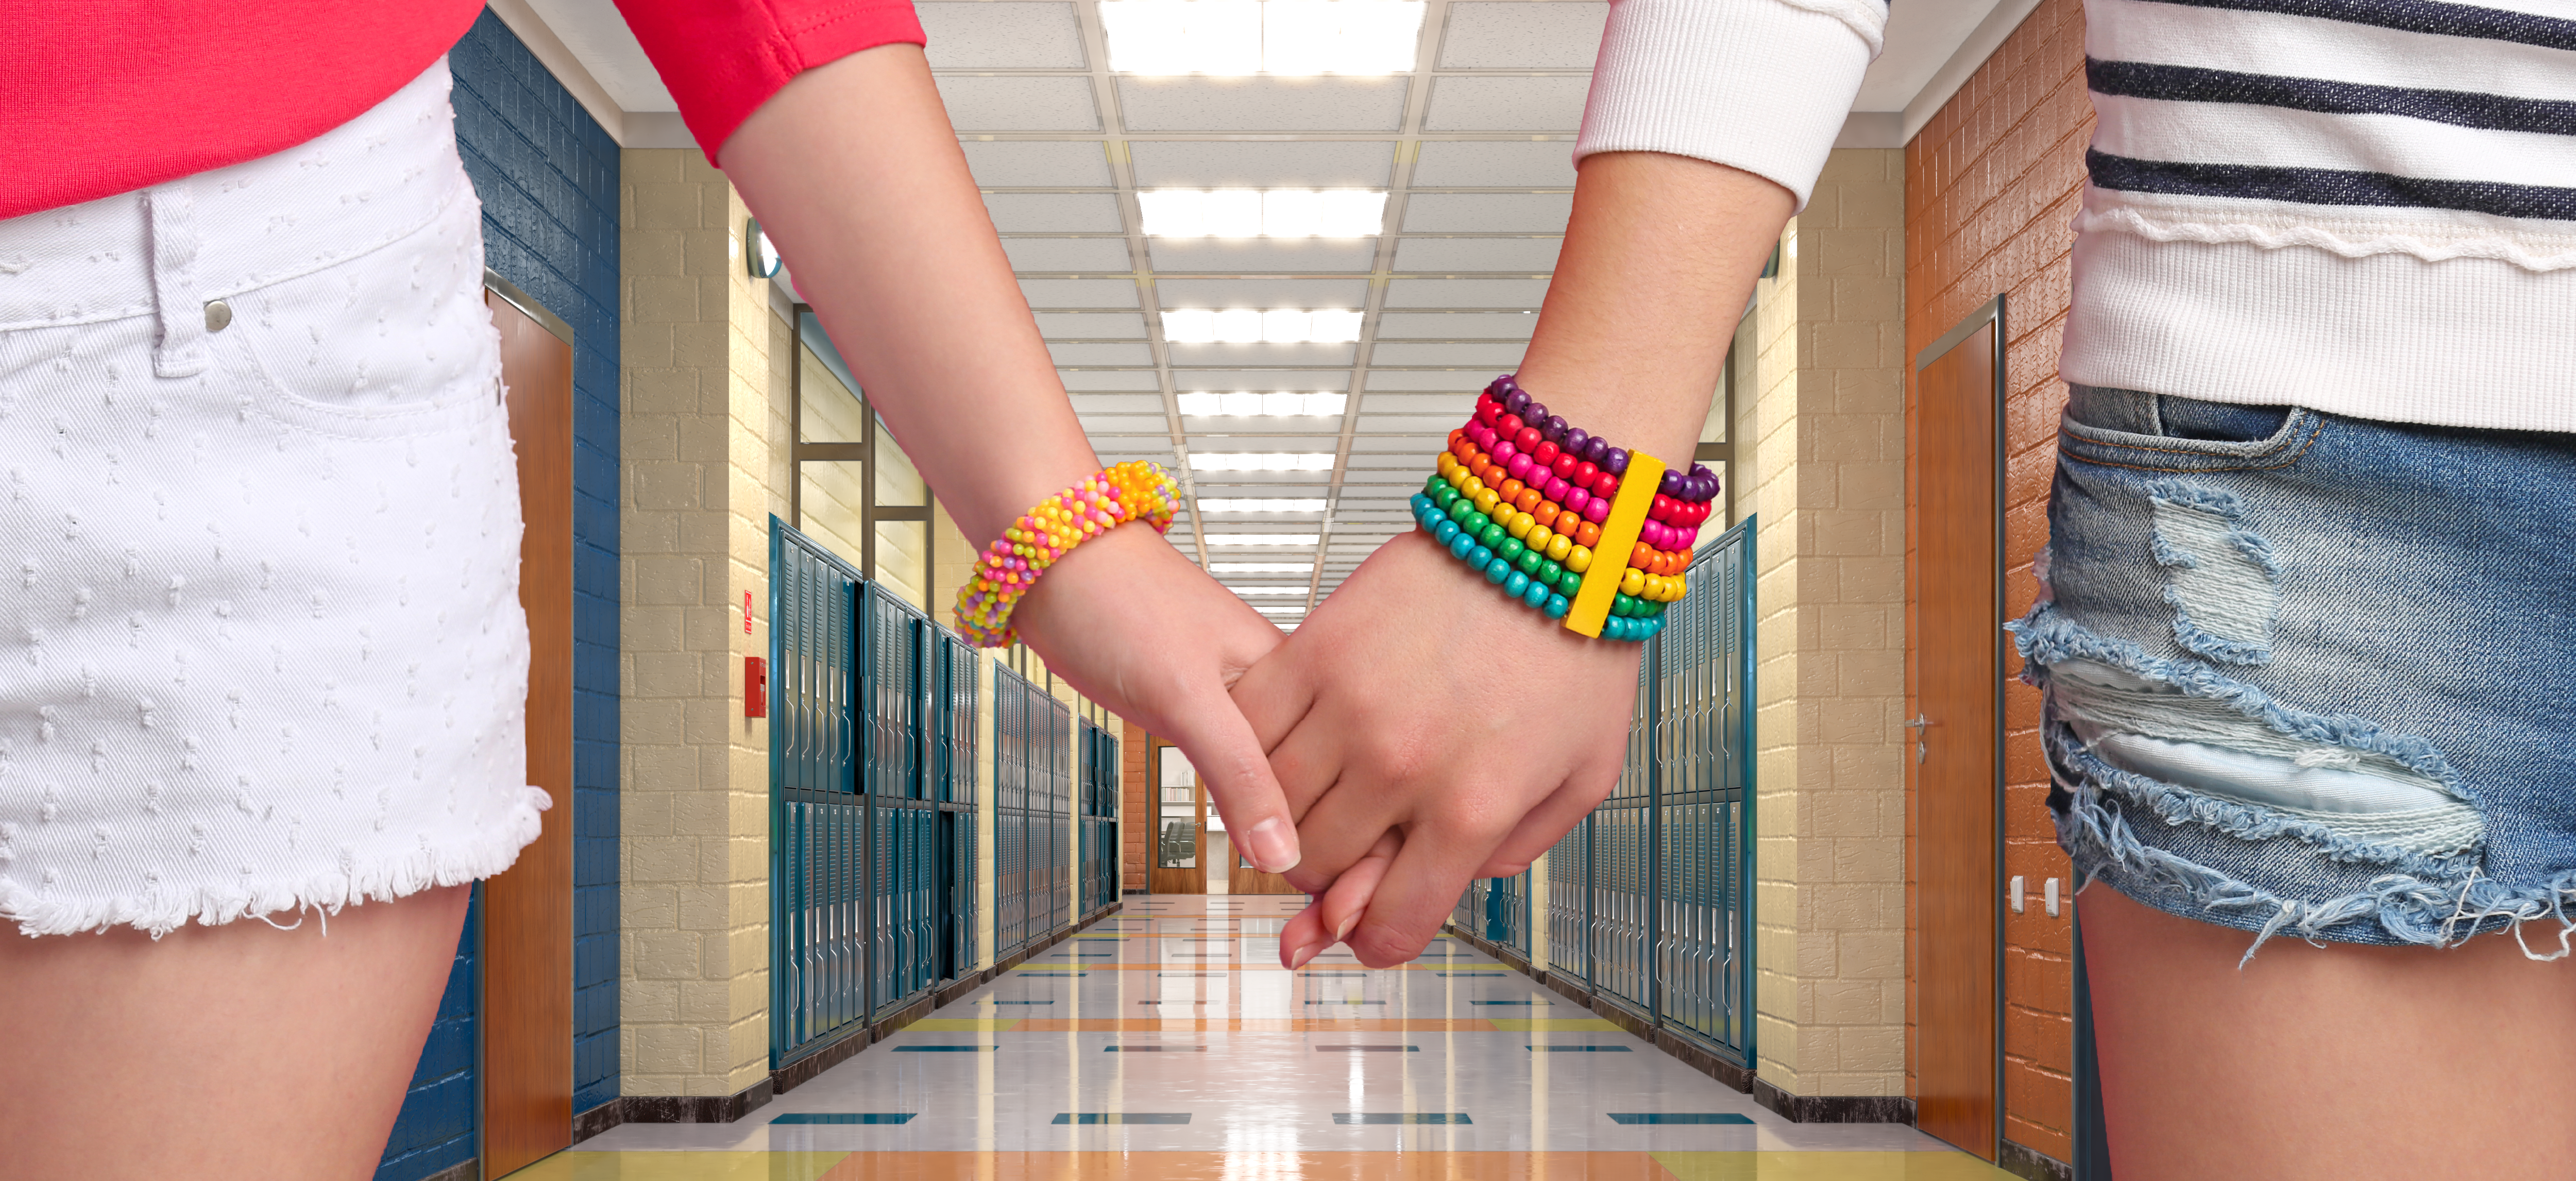 girls holding hands in hallway 01 01